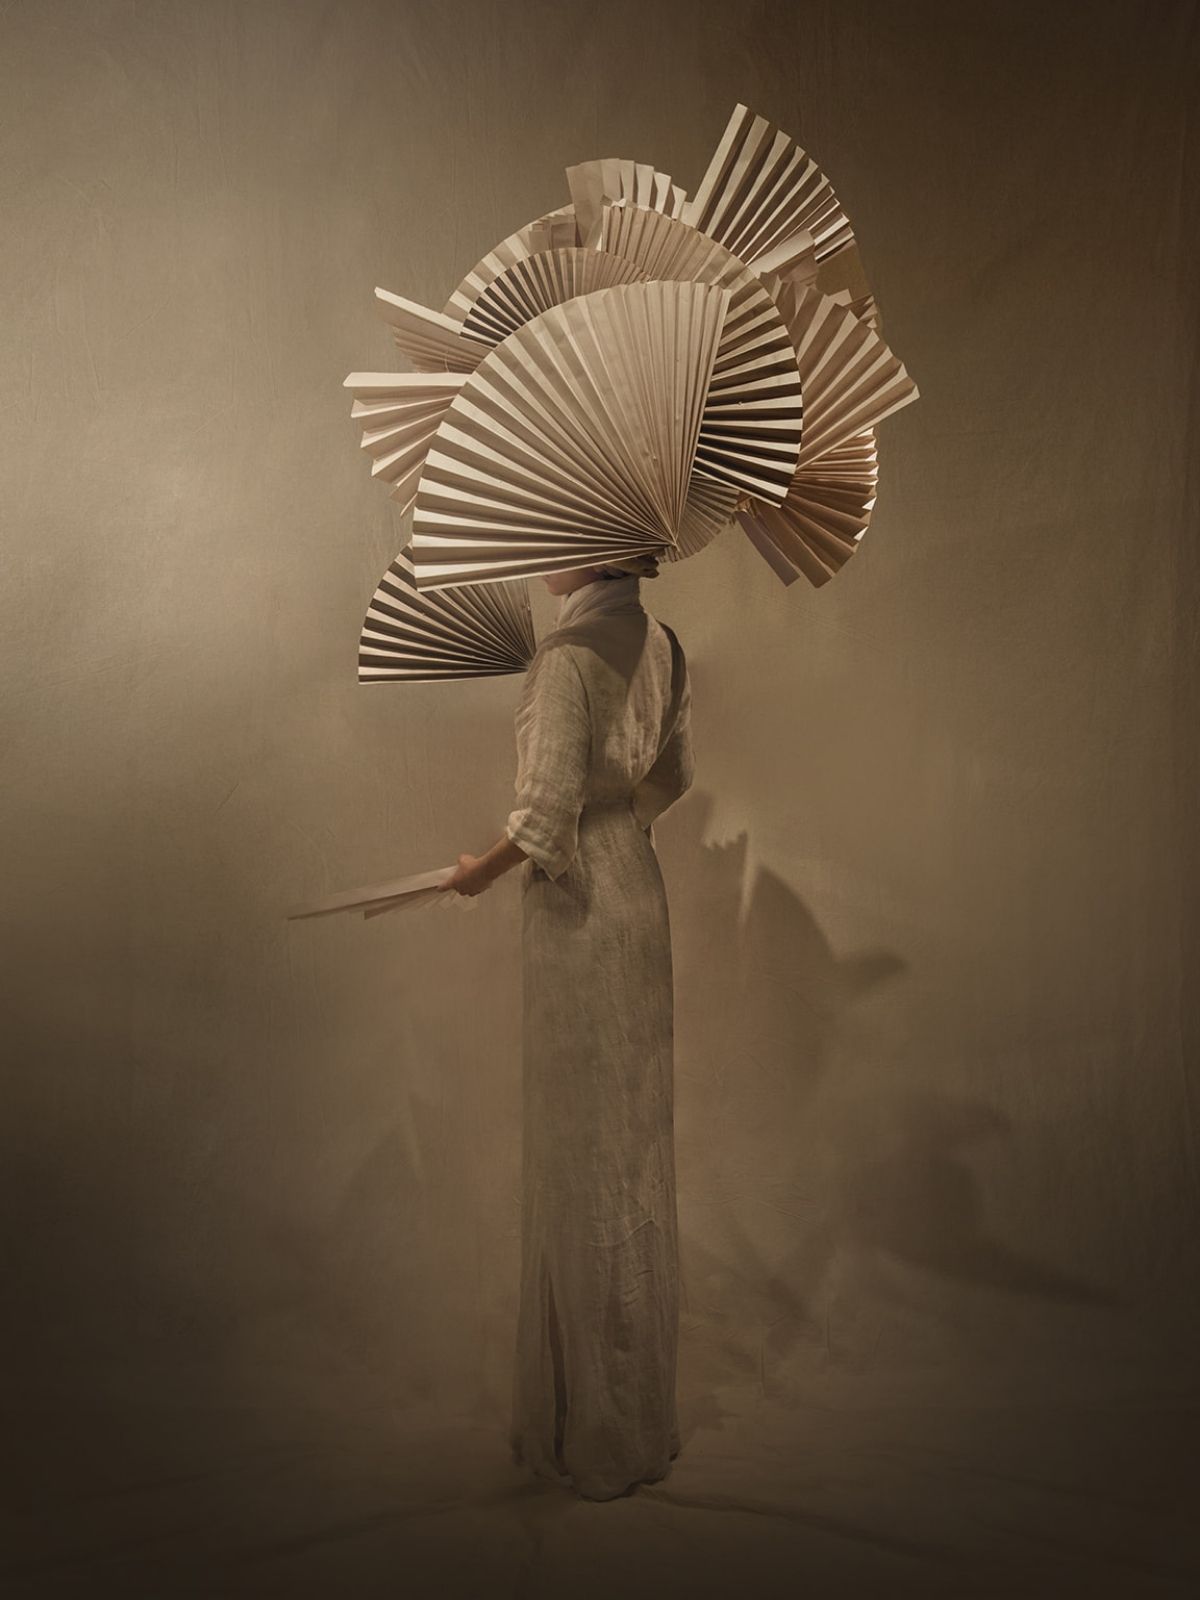 Sculptural Garments Made from Organic Materials - Mono Giraud - The art tree wavers - article on thursd